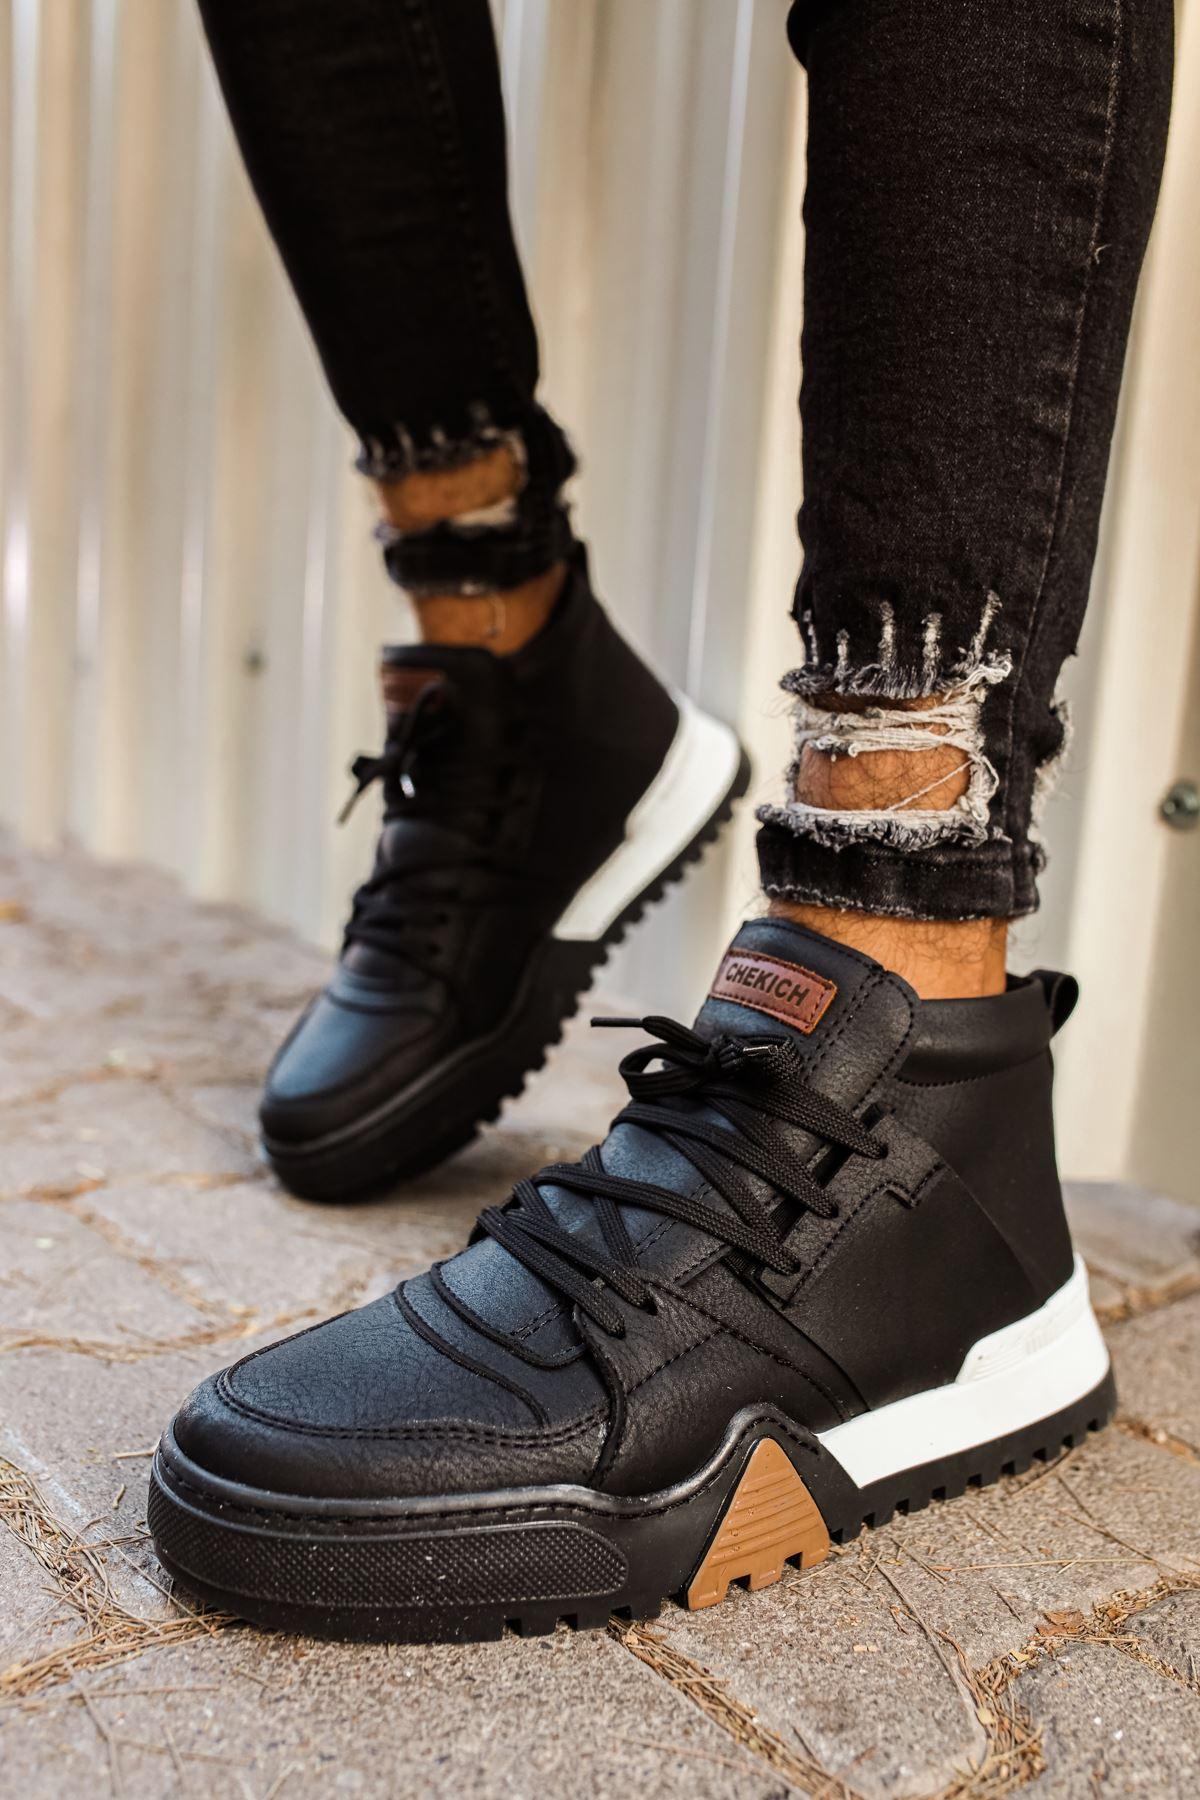 CH057 SBT Men's Sneaker Boots BLACK / BLACK - STREET MODE ™